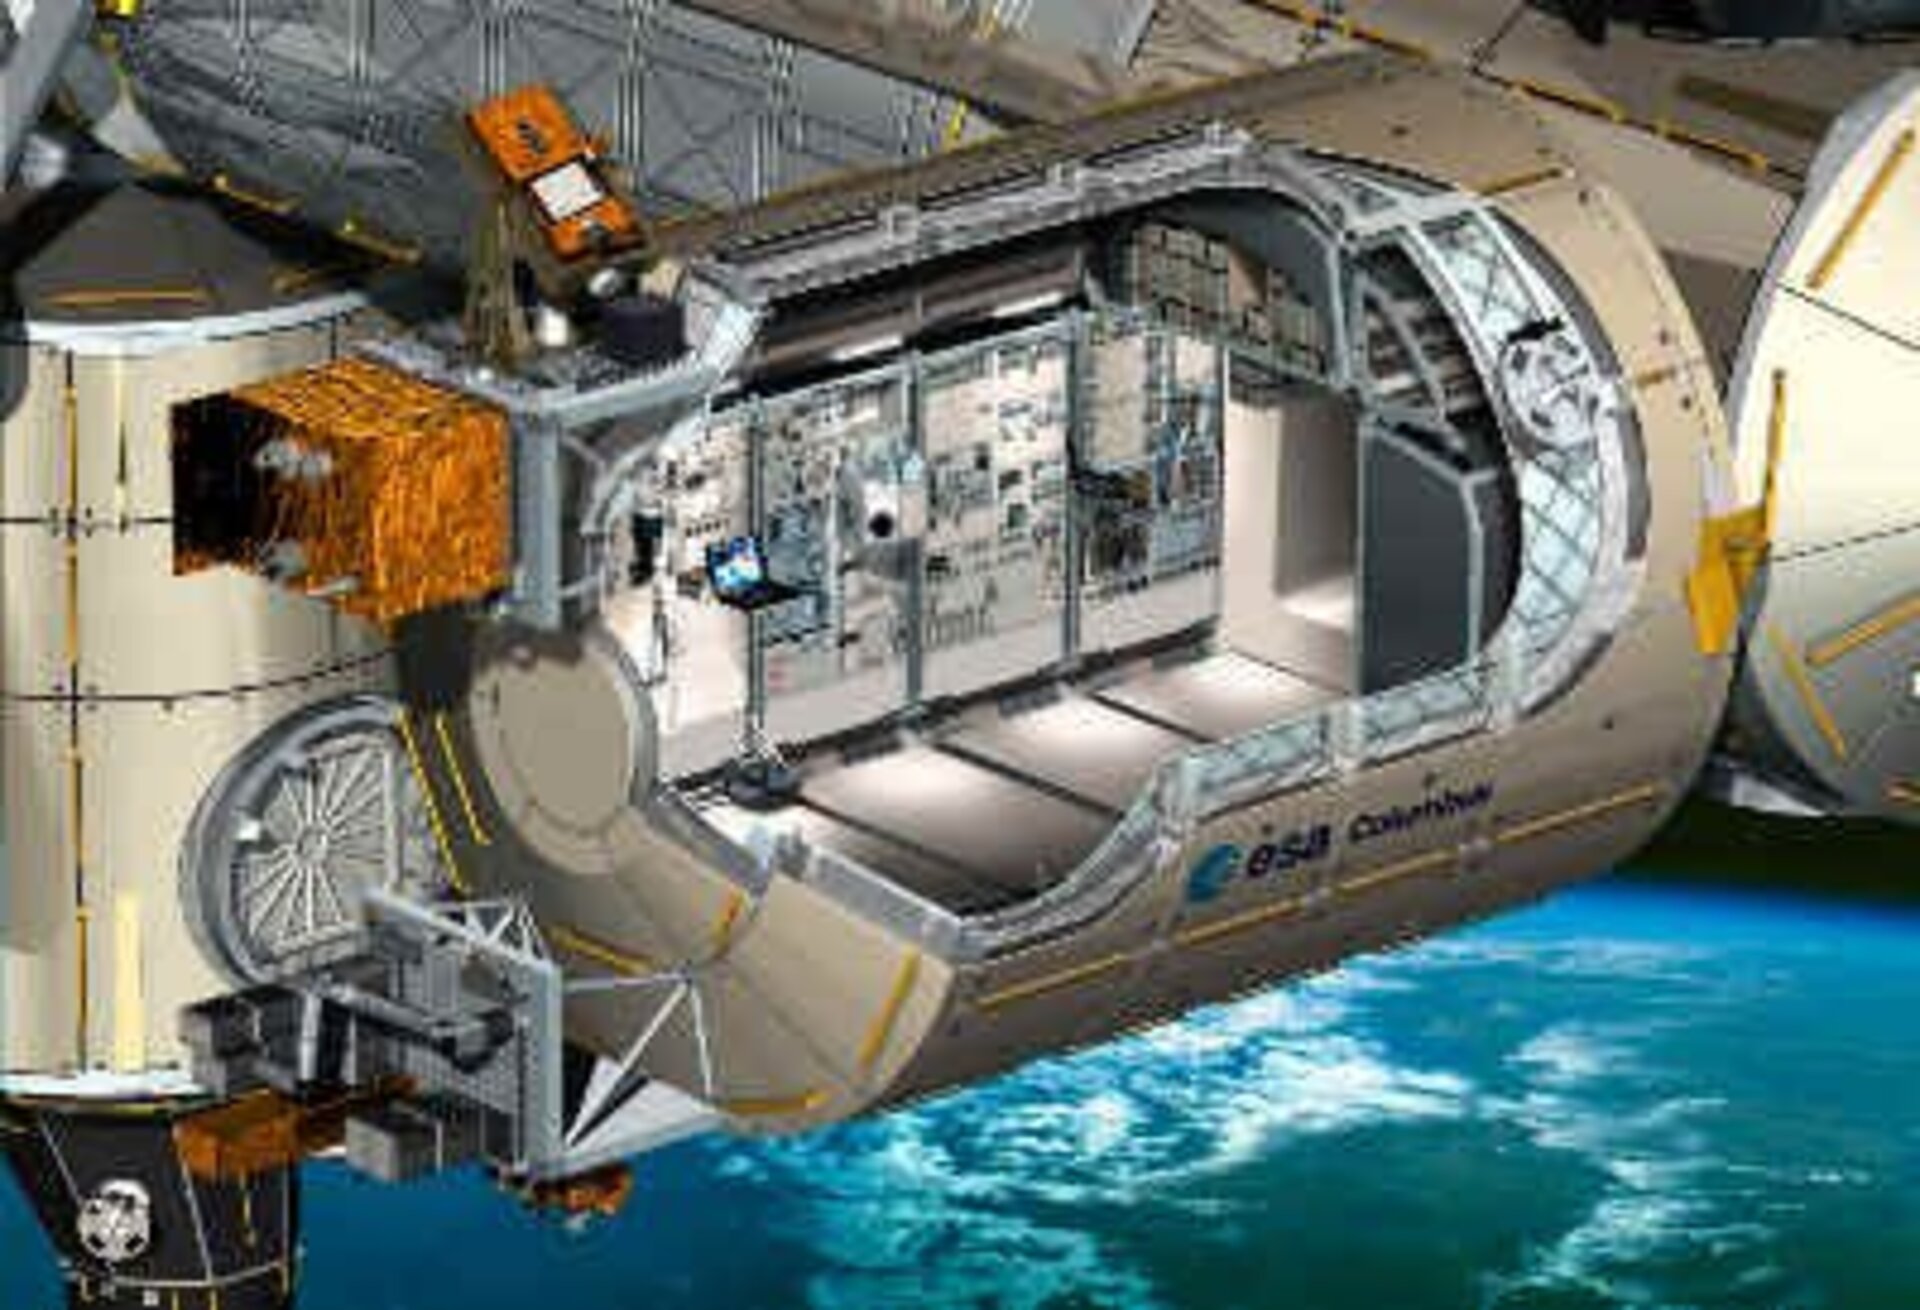 ESA's Columbus laboratory